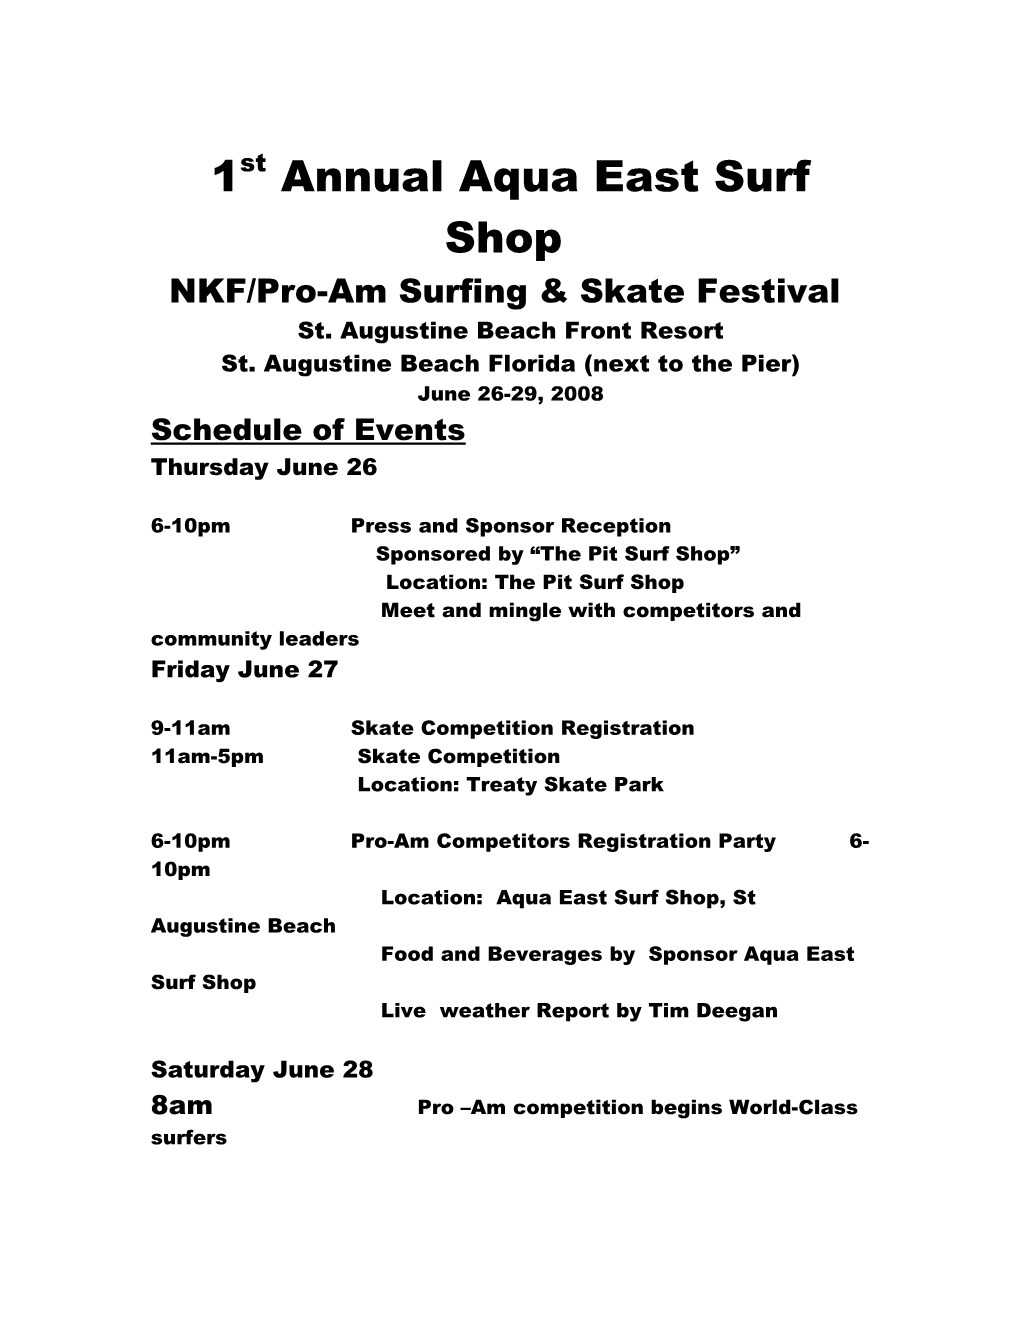 1St Annual Aqua East Surf Shop